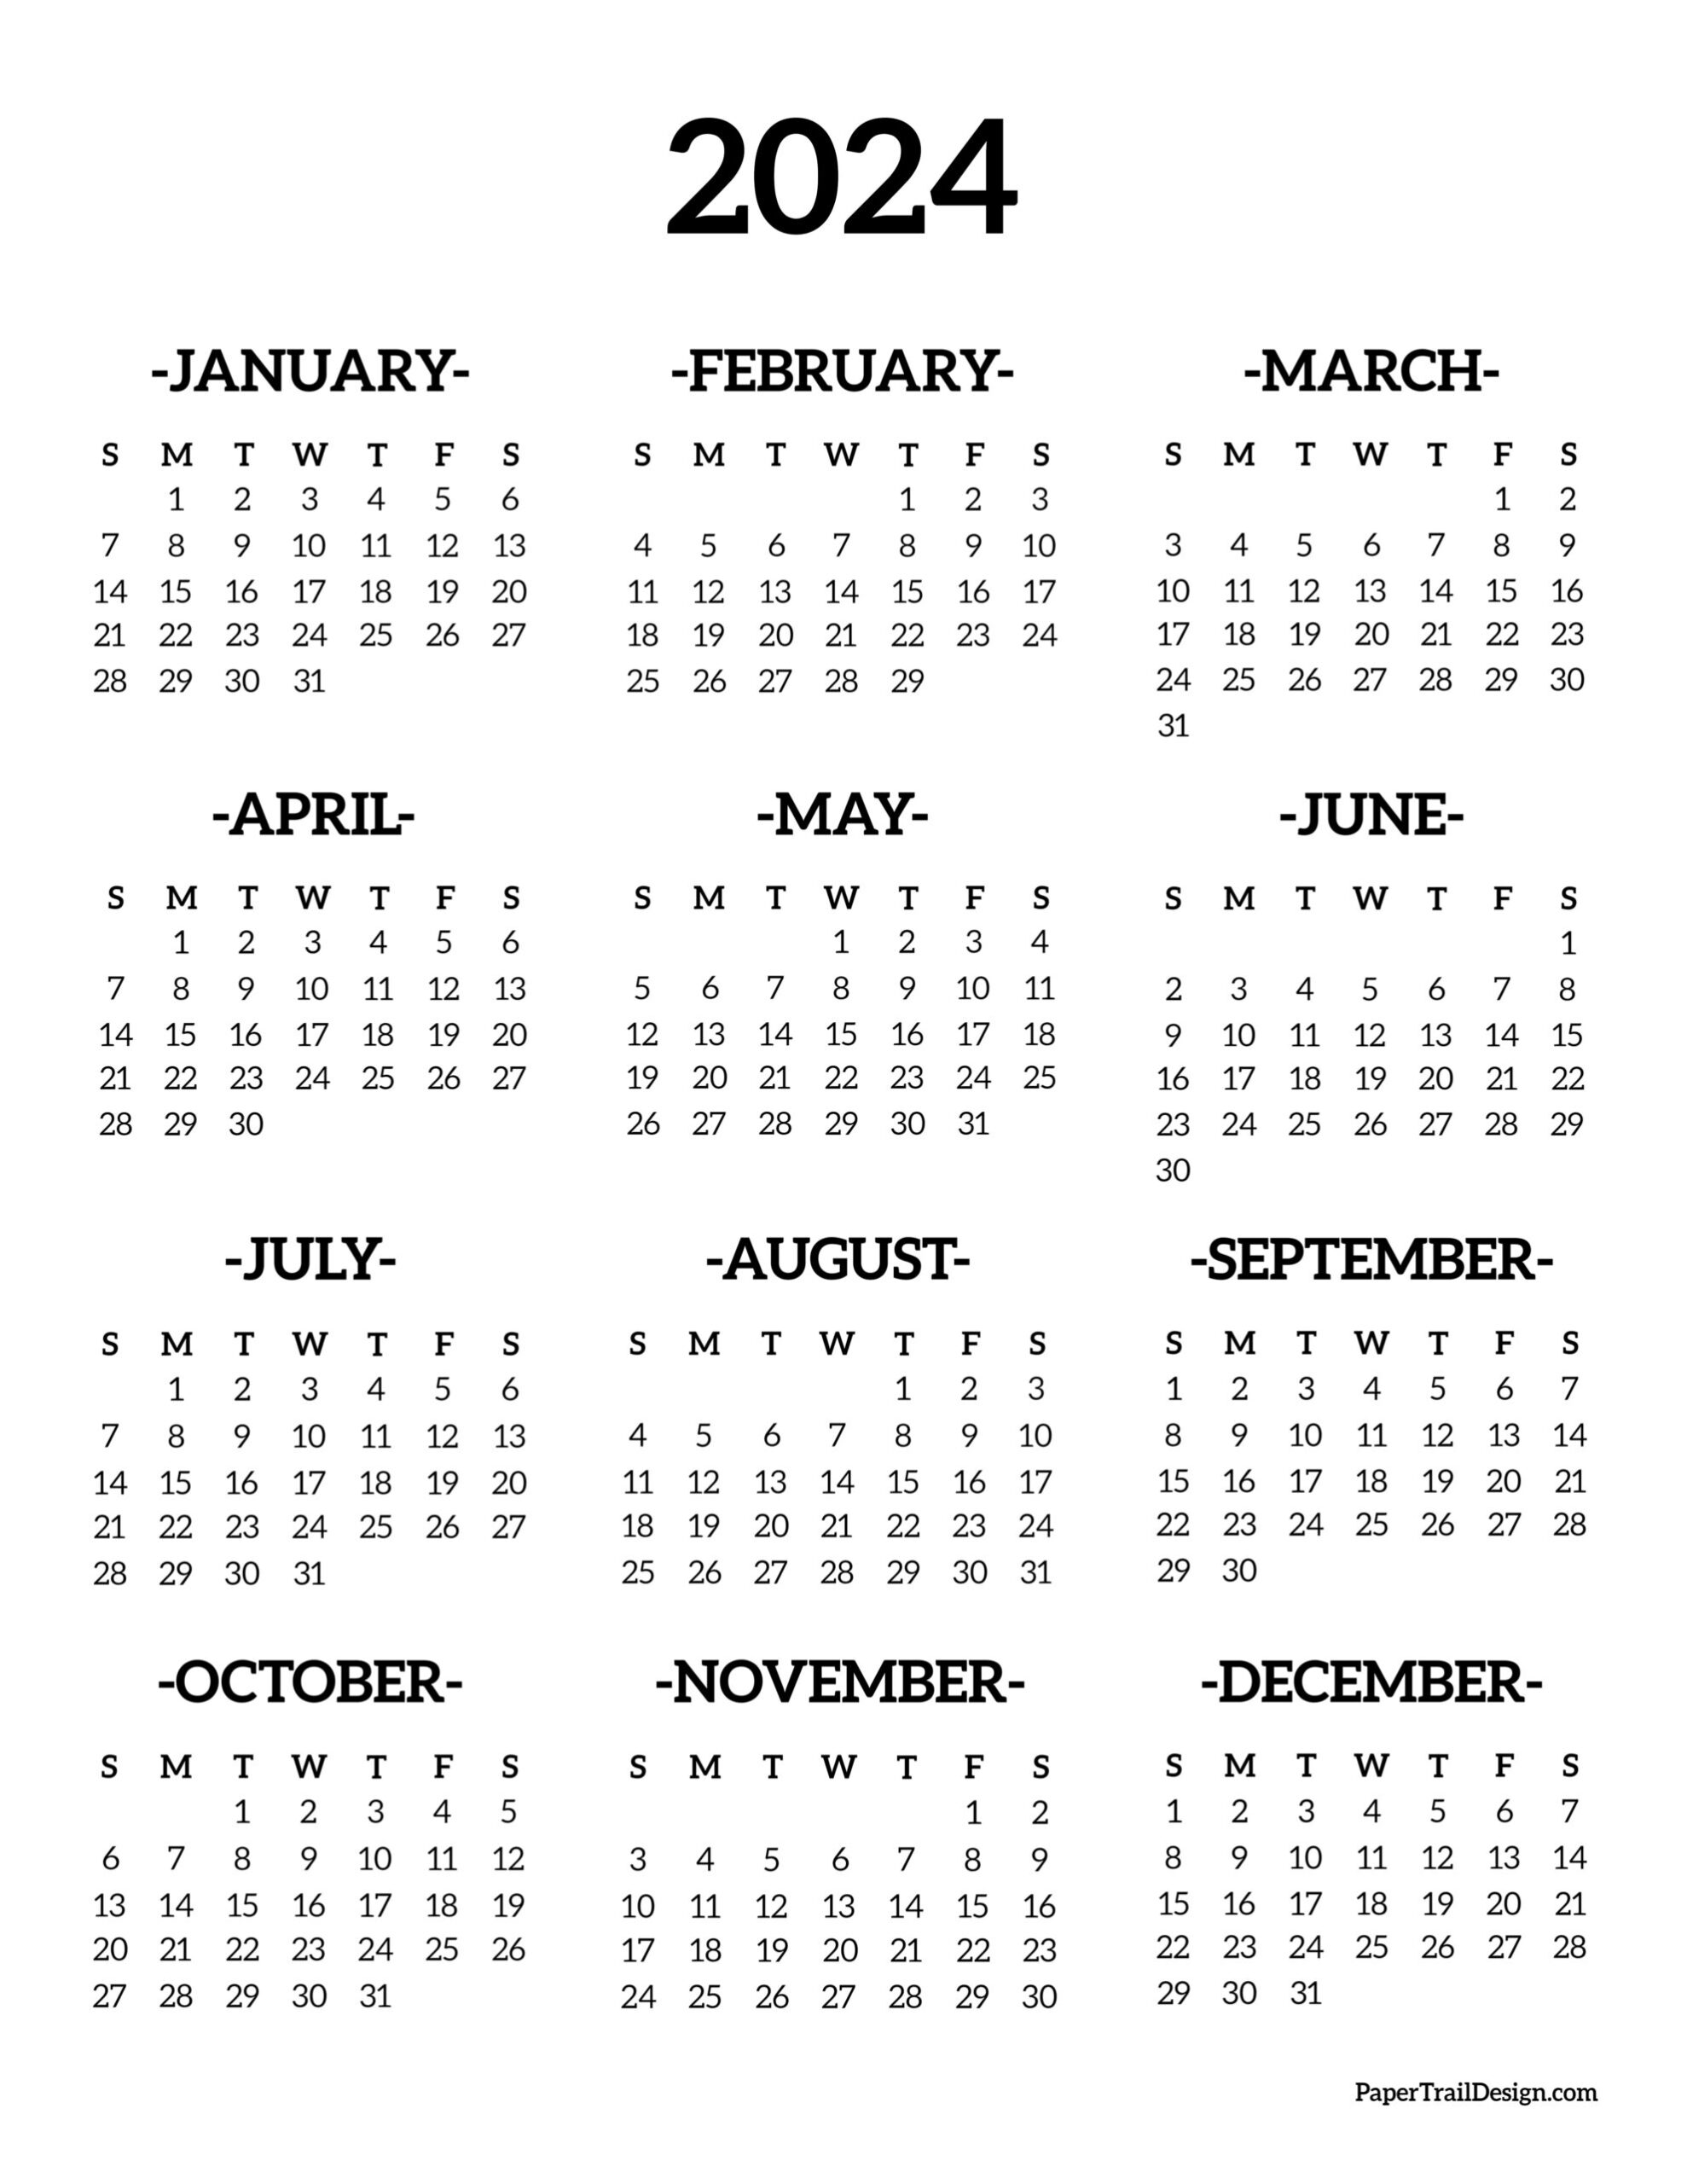 Calendar 2024 Printable One Page - Paper Trail Design for Calendar 2024 Printable Free